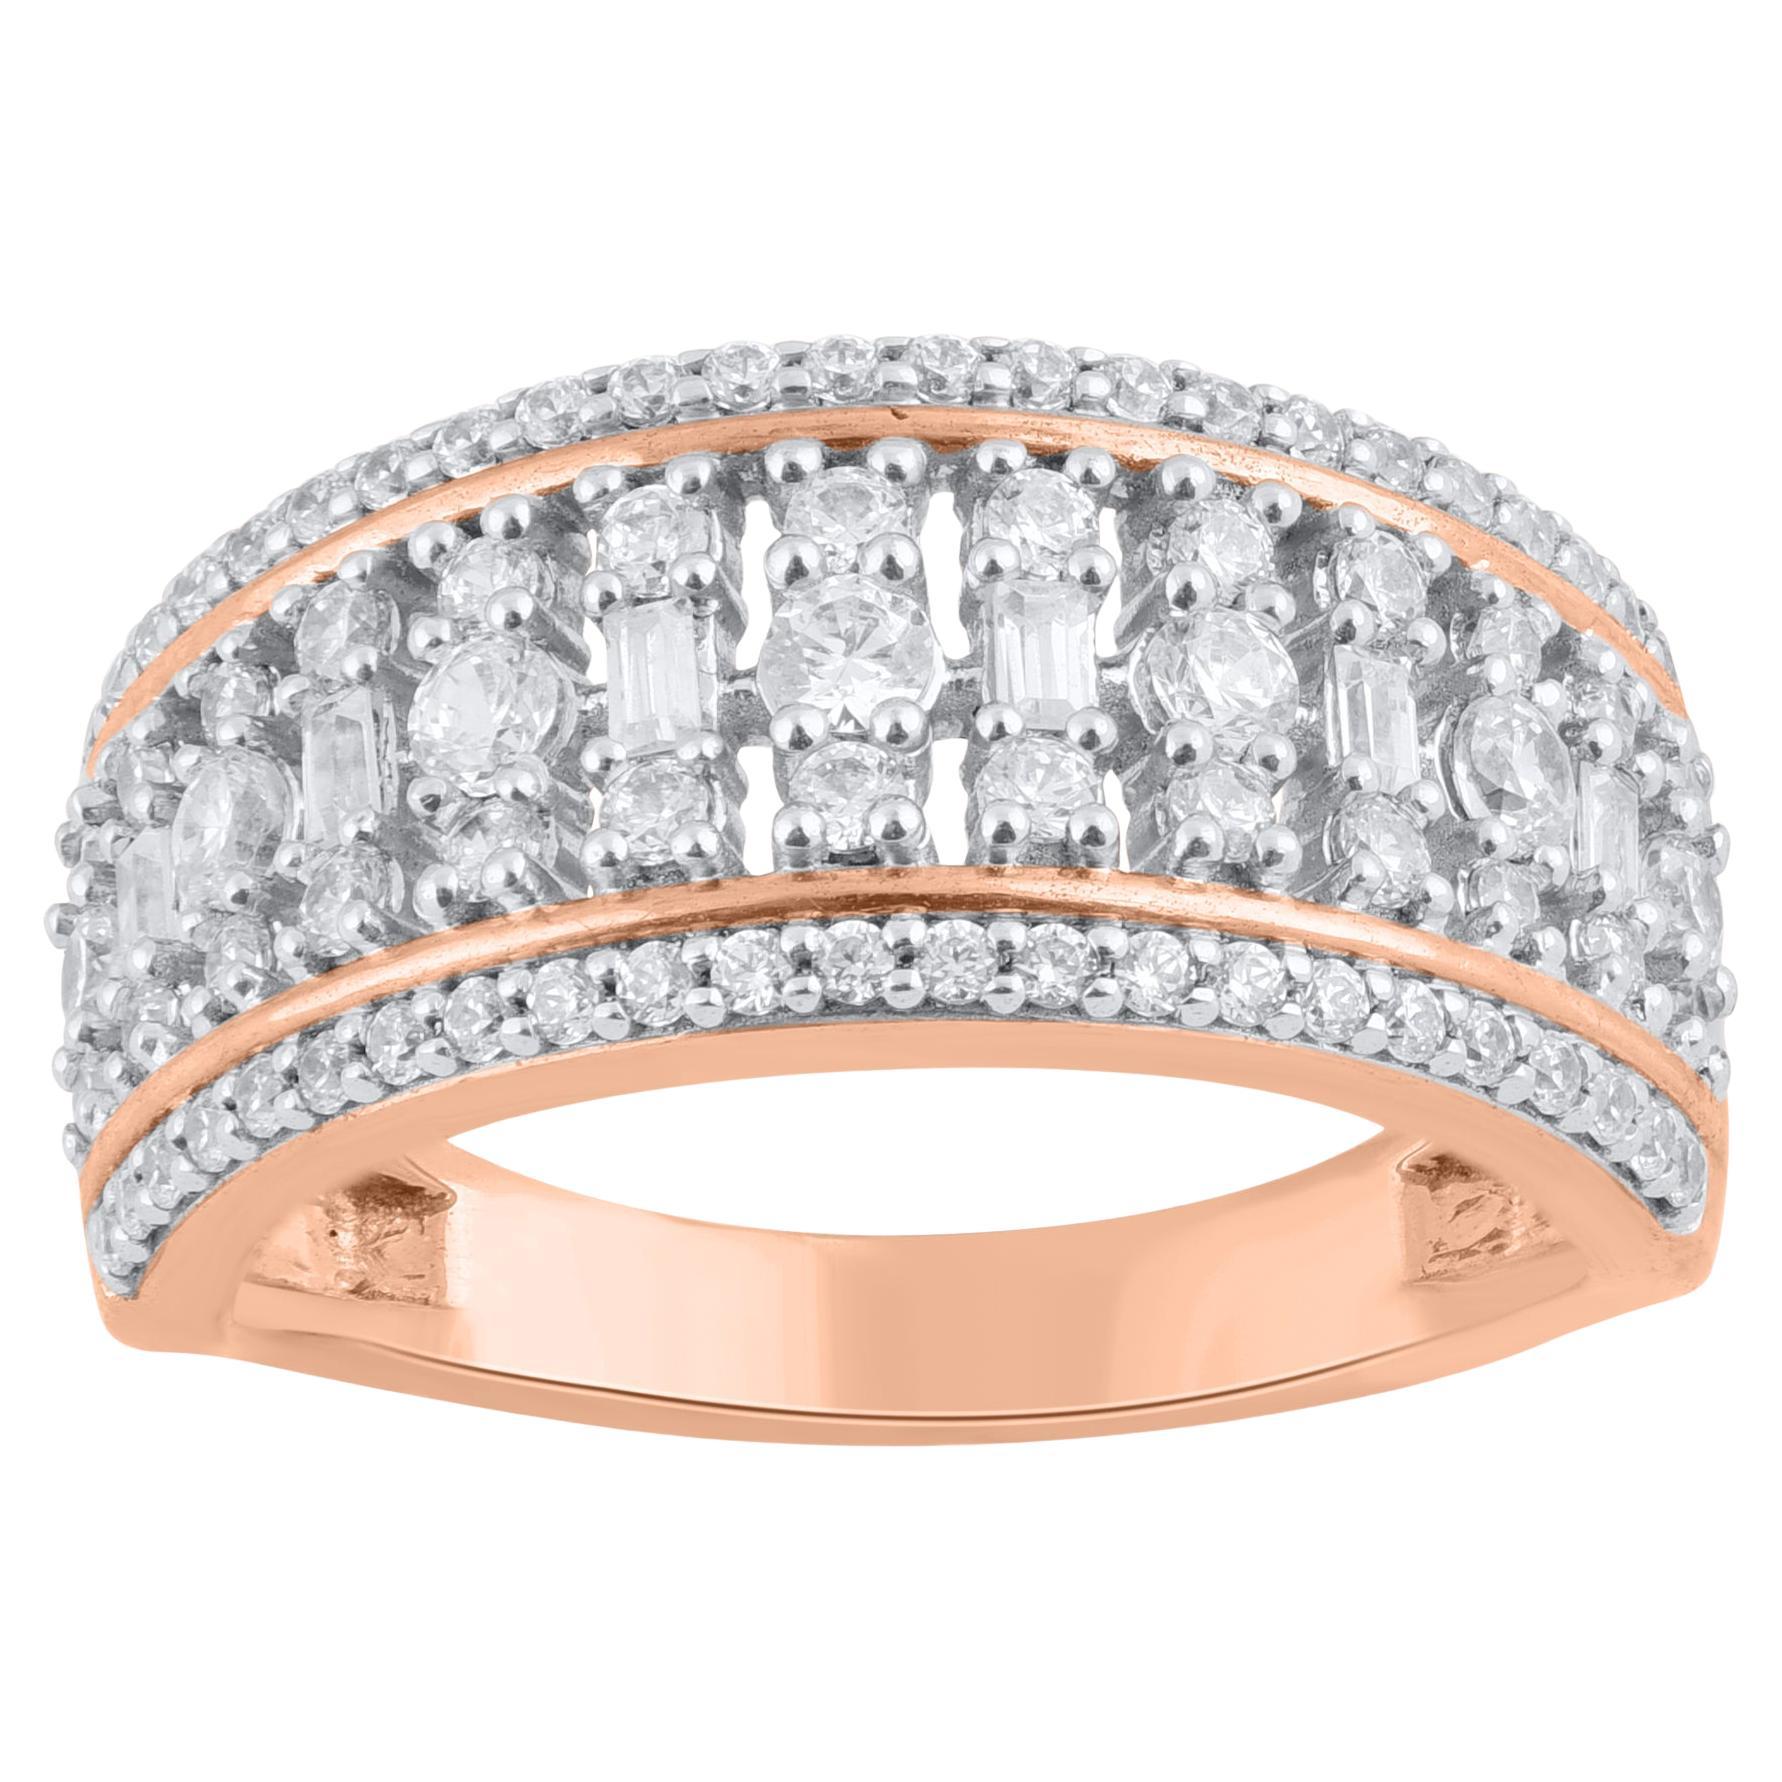 TJD 1.0 Carat Round & Baguette Natural Diamond 18KT Rose Gold Wedding Band Ring